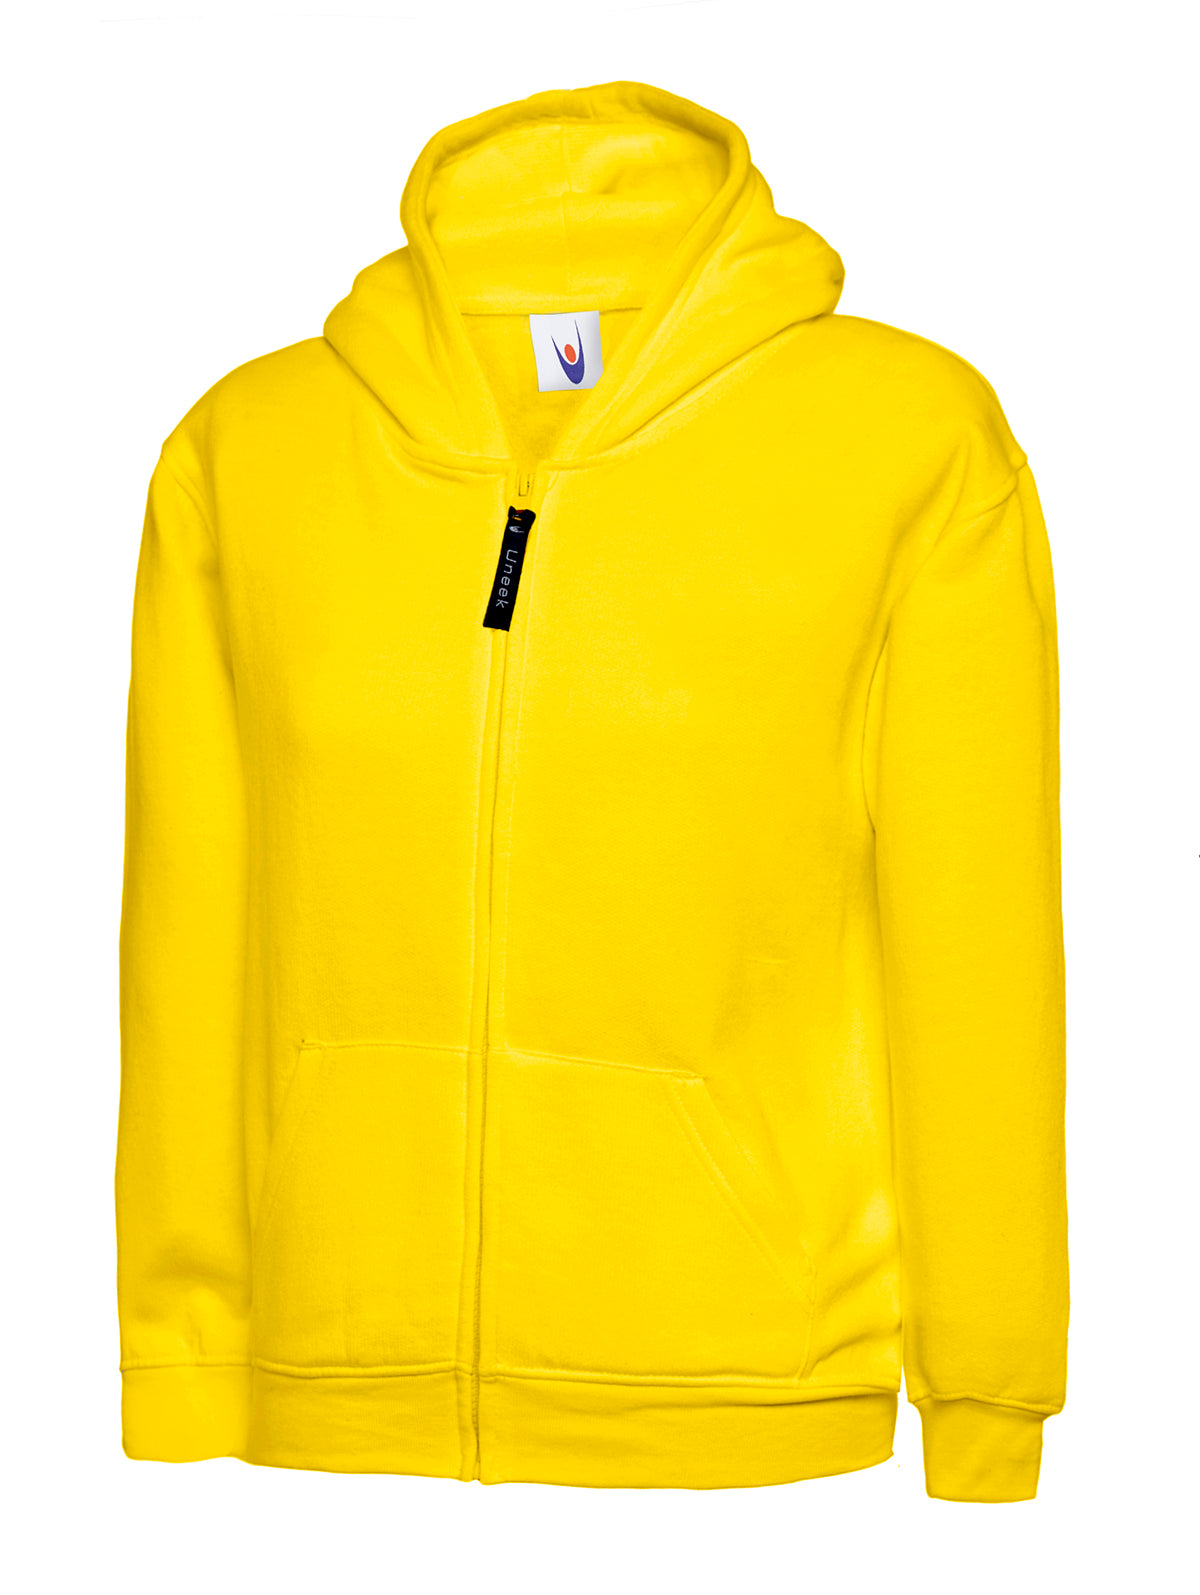 Uneek Childrens Classic Full Zip Hooded Sweatshirt UC506 - Yellow